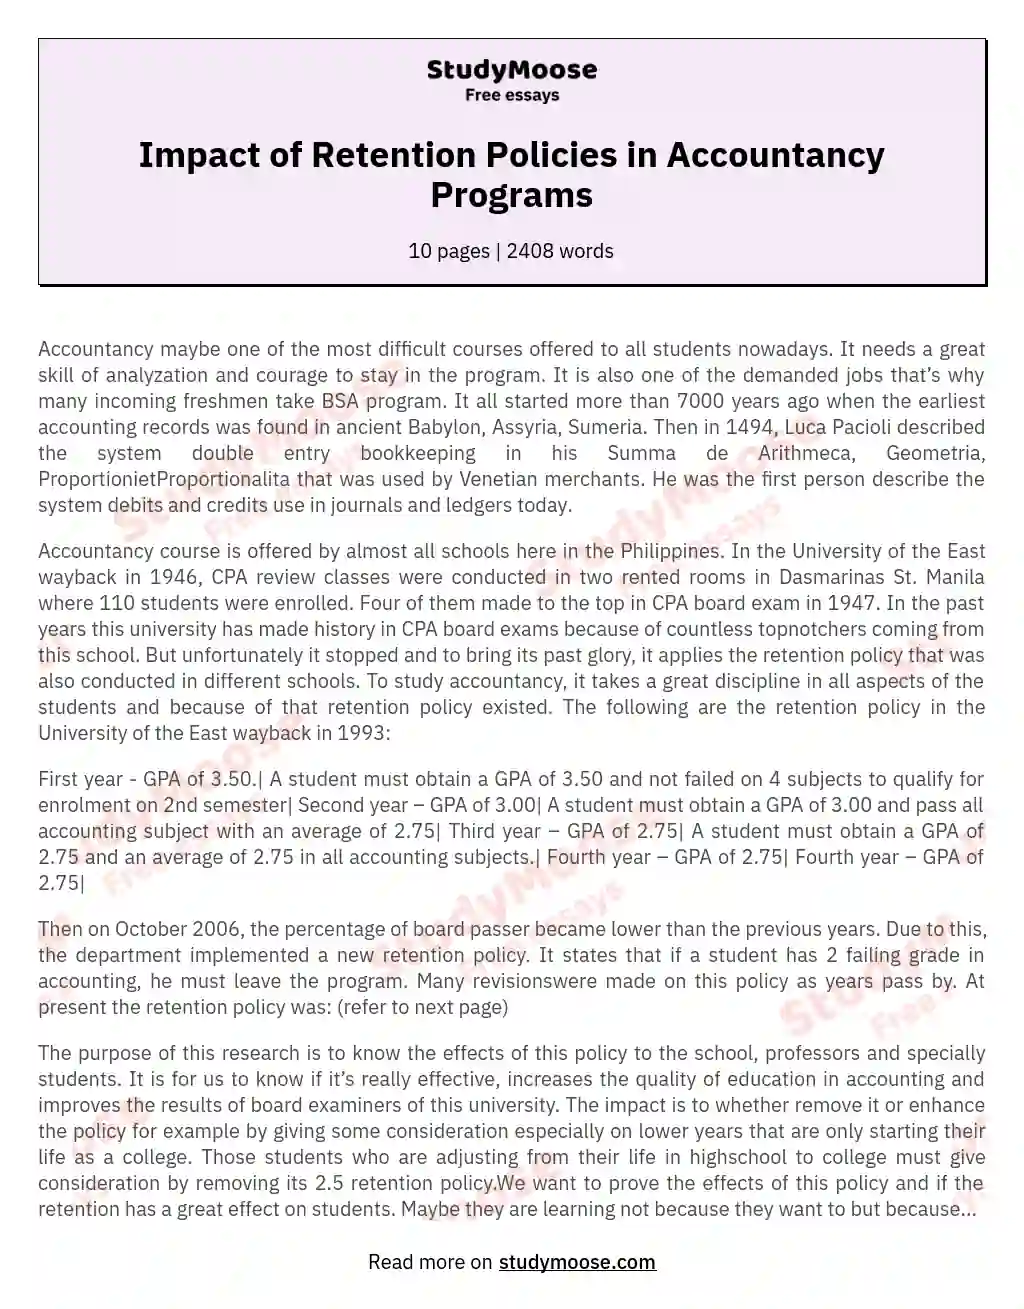 Impact of Retention Policies in Accountancy Programs essay